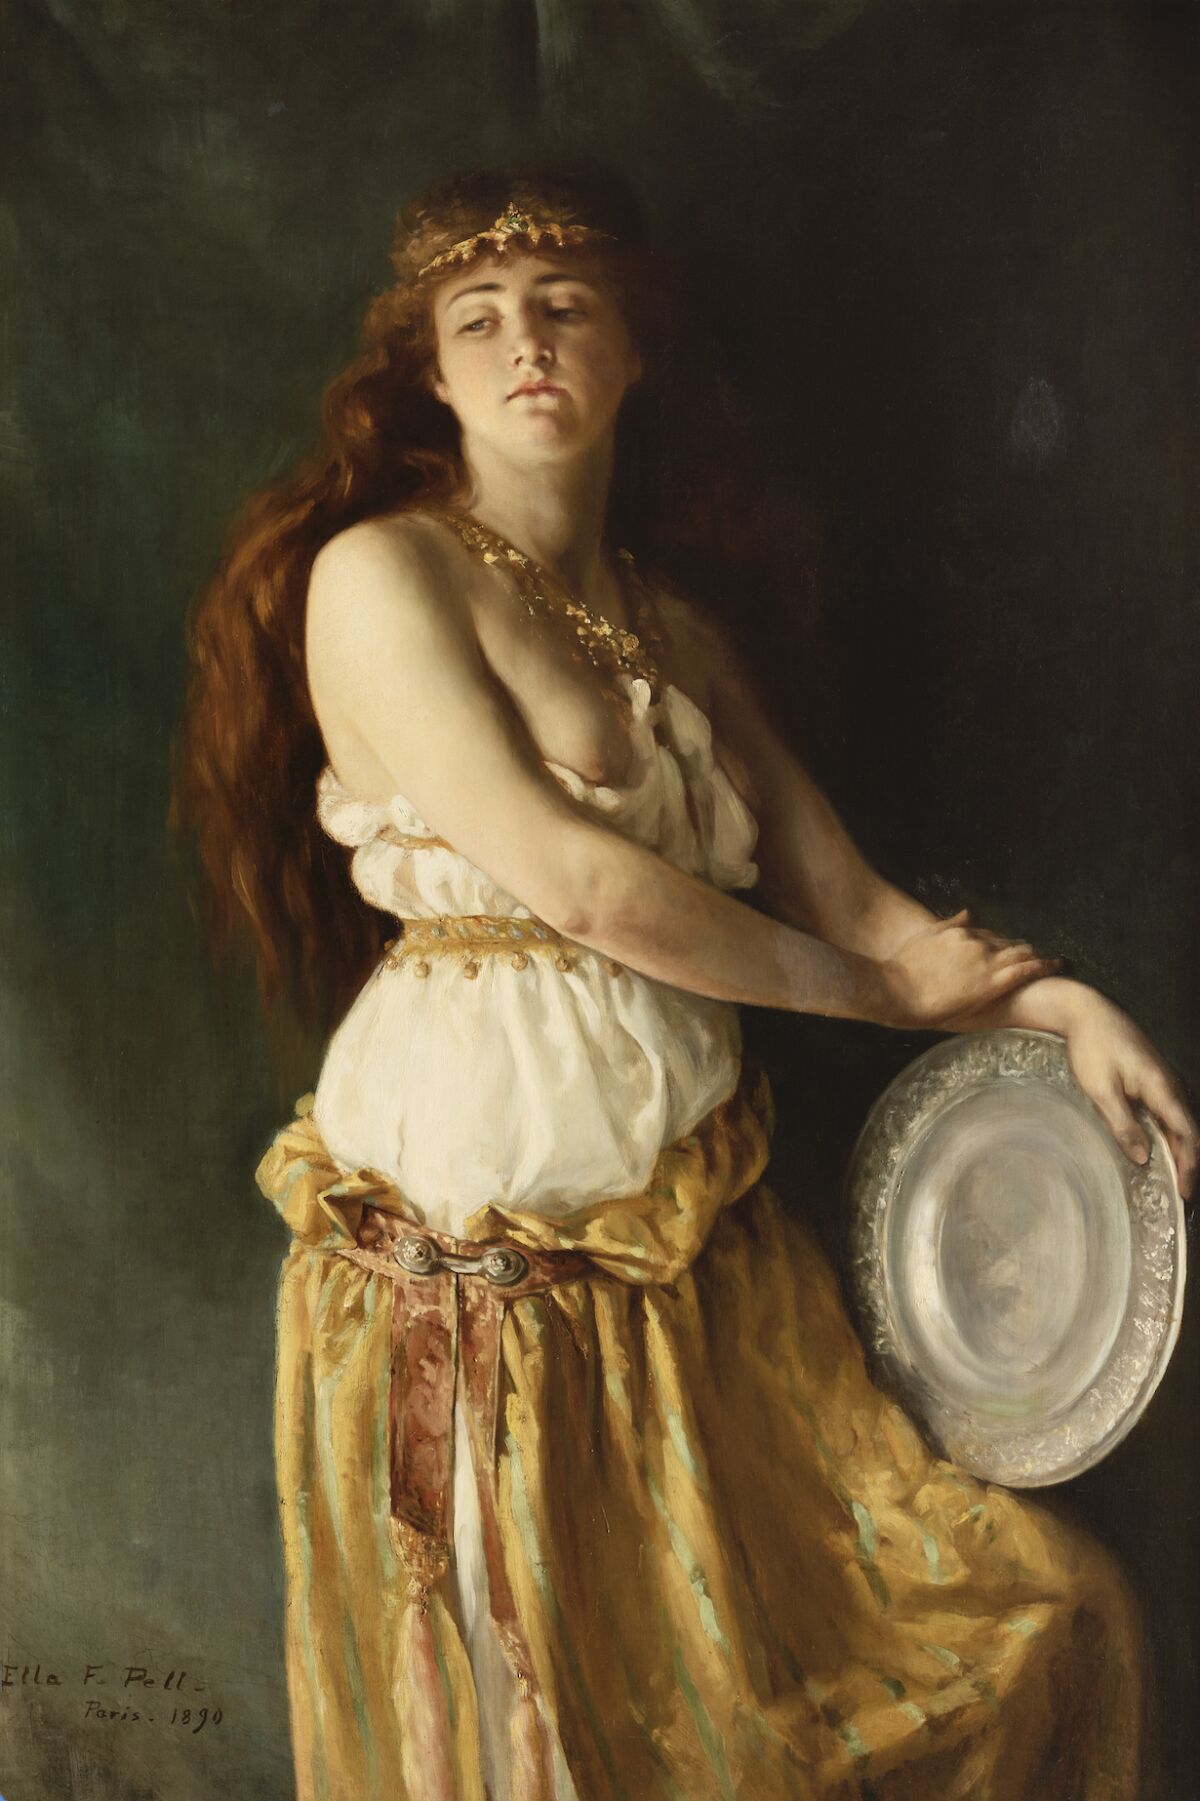 Ella Ferris Pell, Salomé, 1890